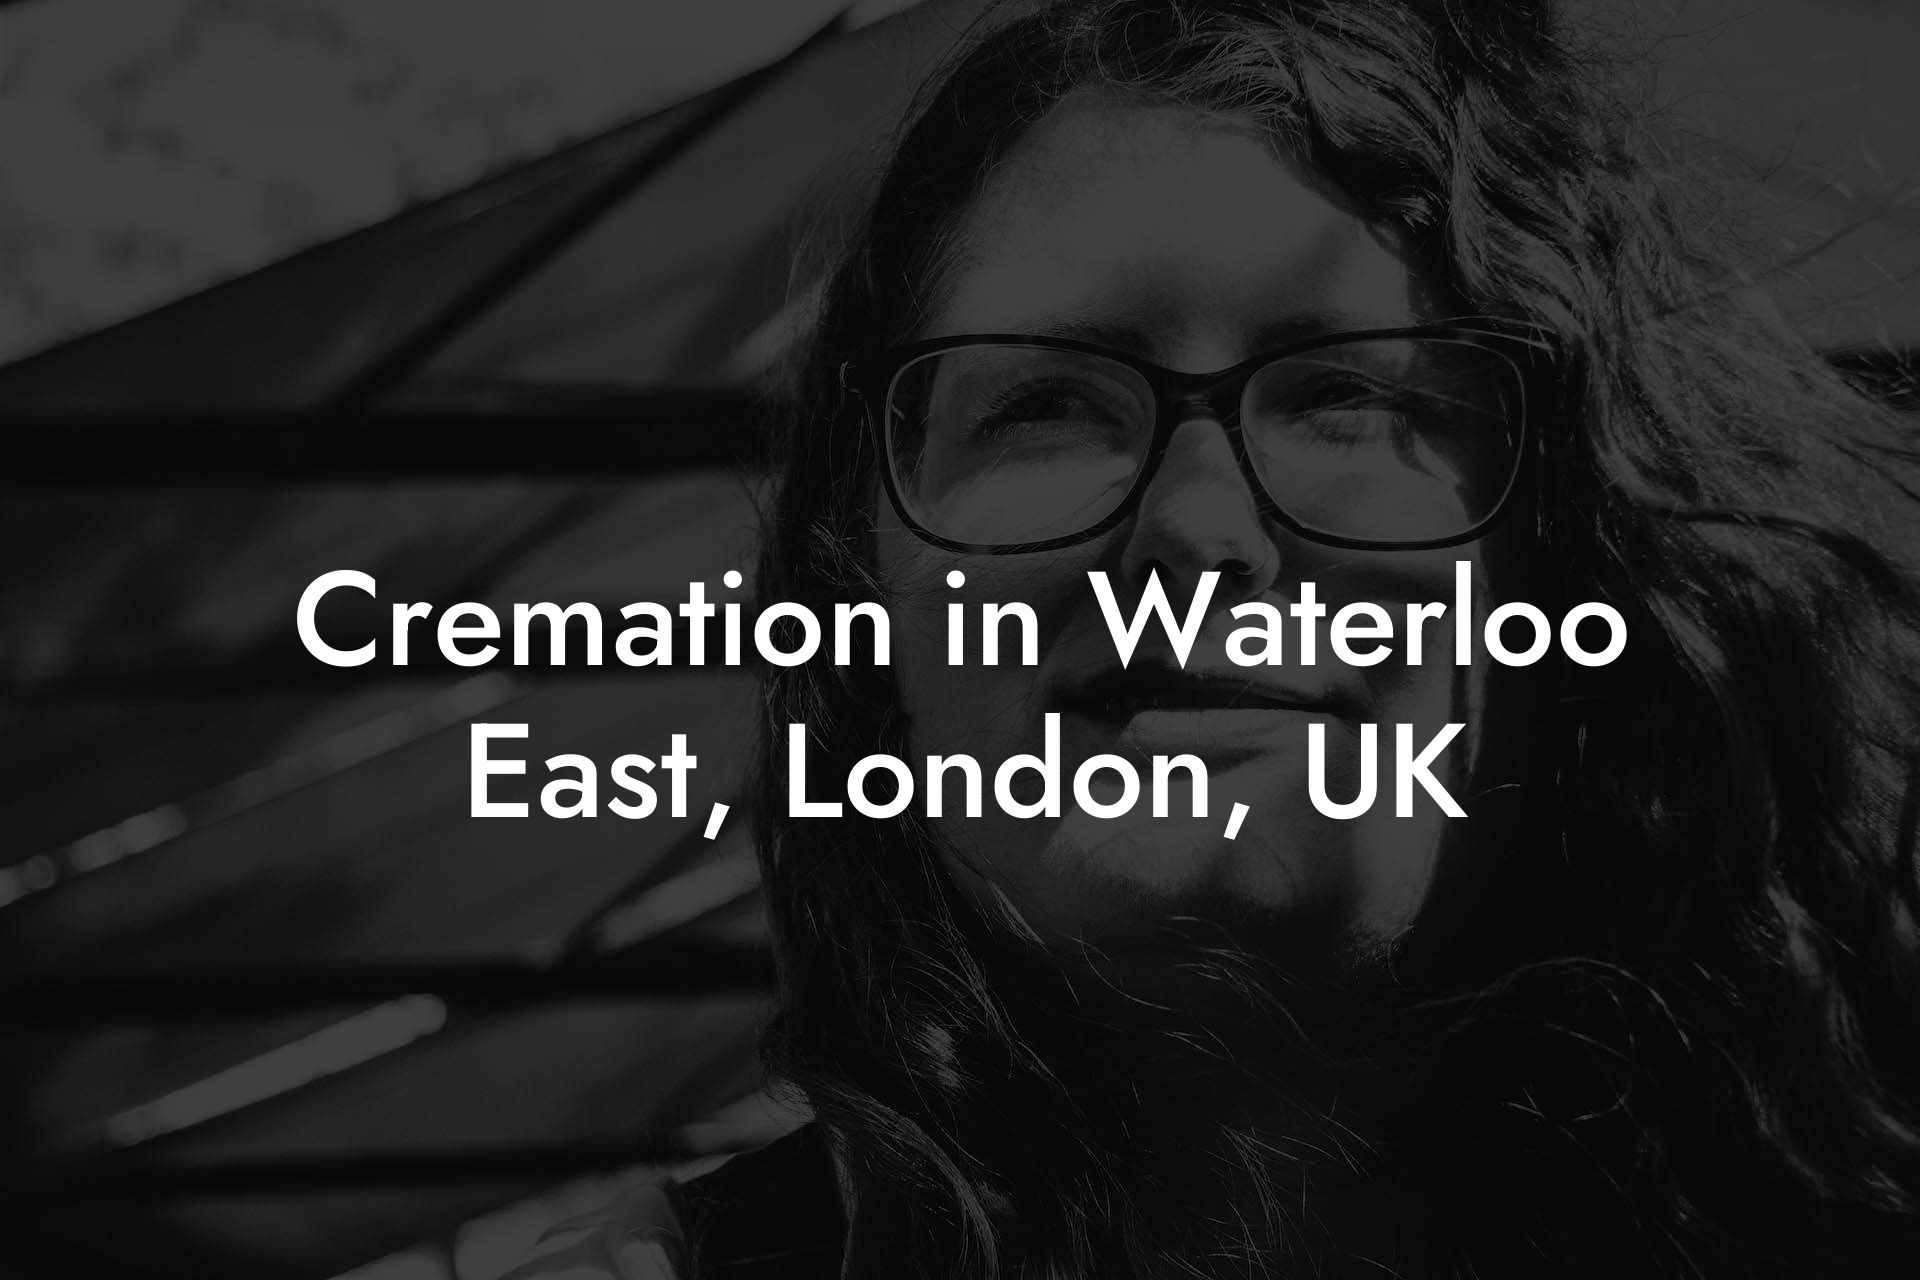 Cremation in Waterloo East, London, UK